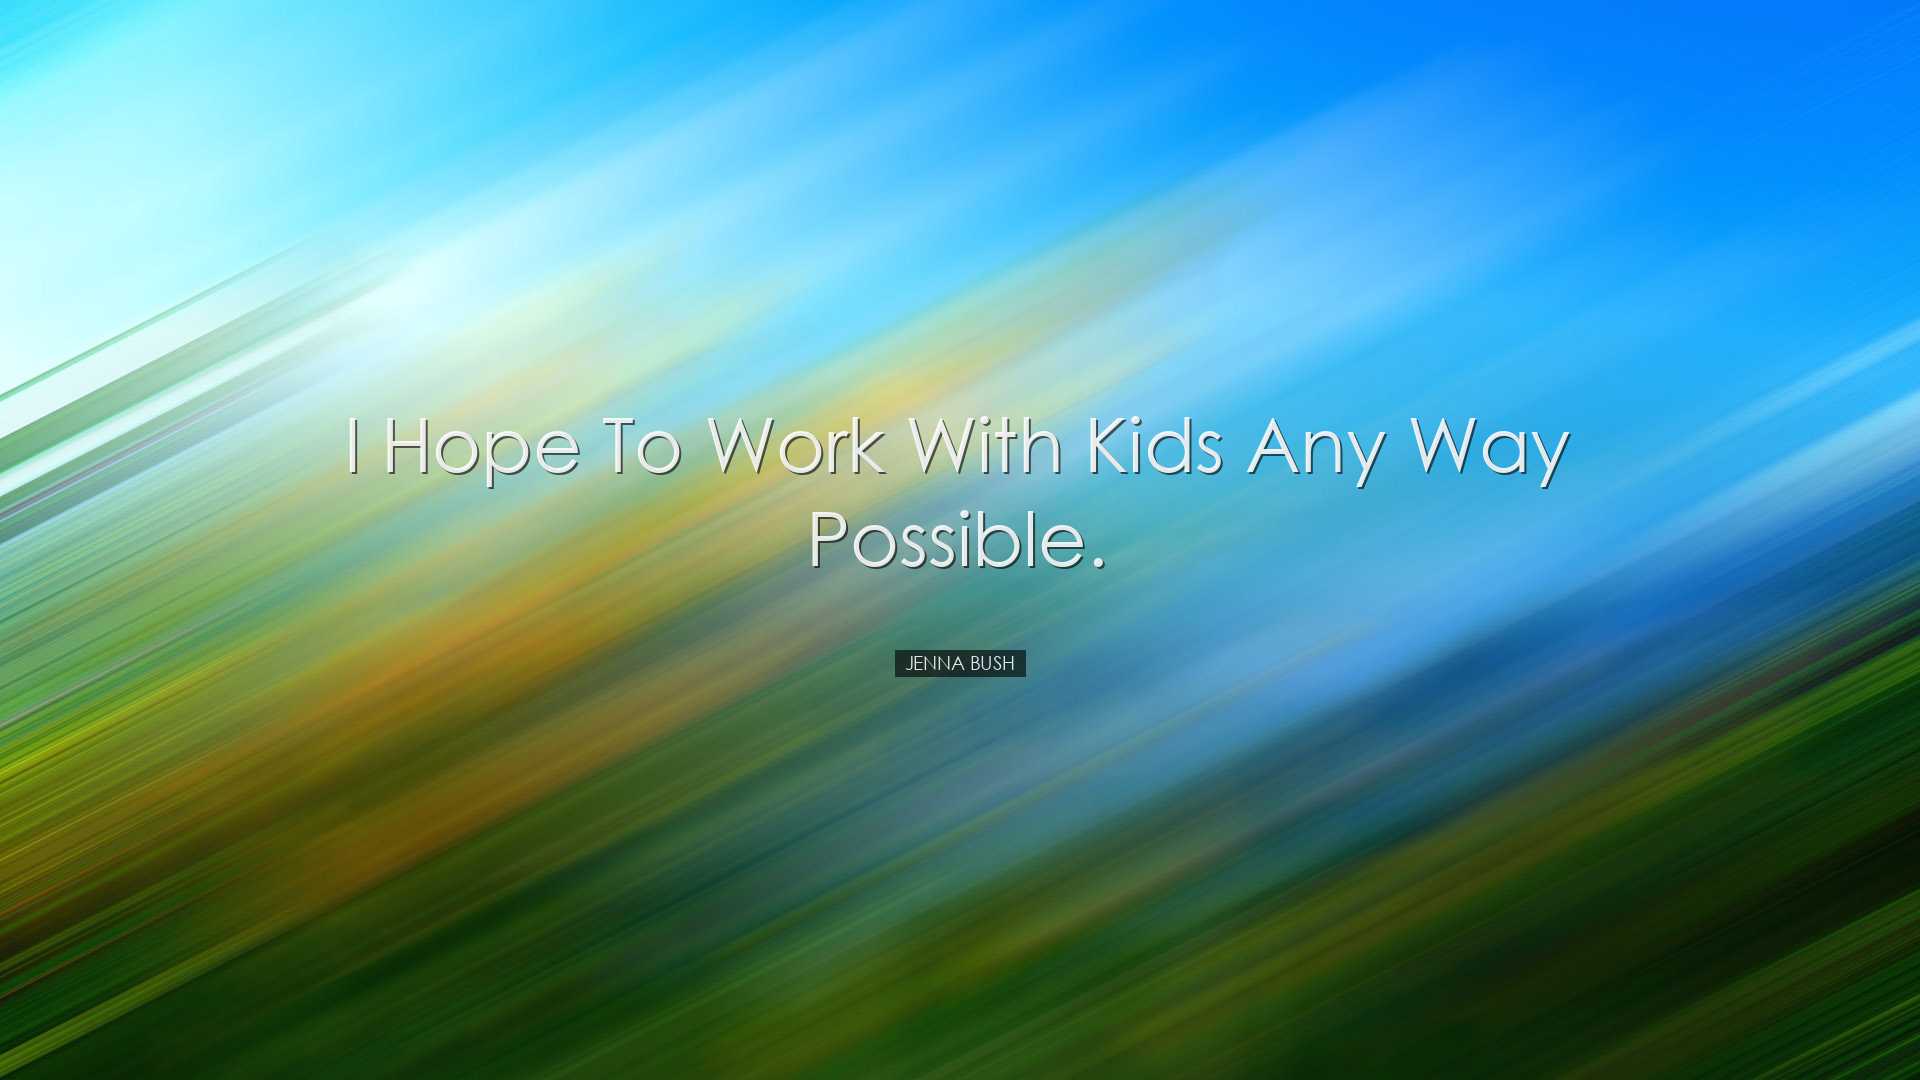 I hope to work with kids any way possible. - Jenna Bush